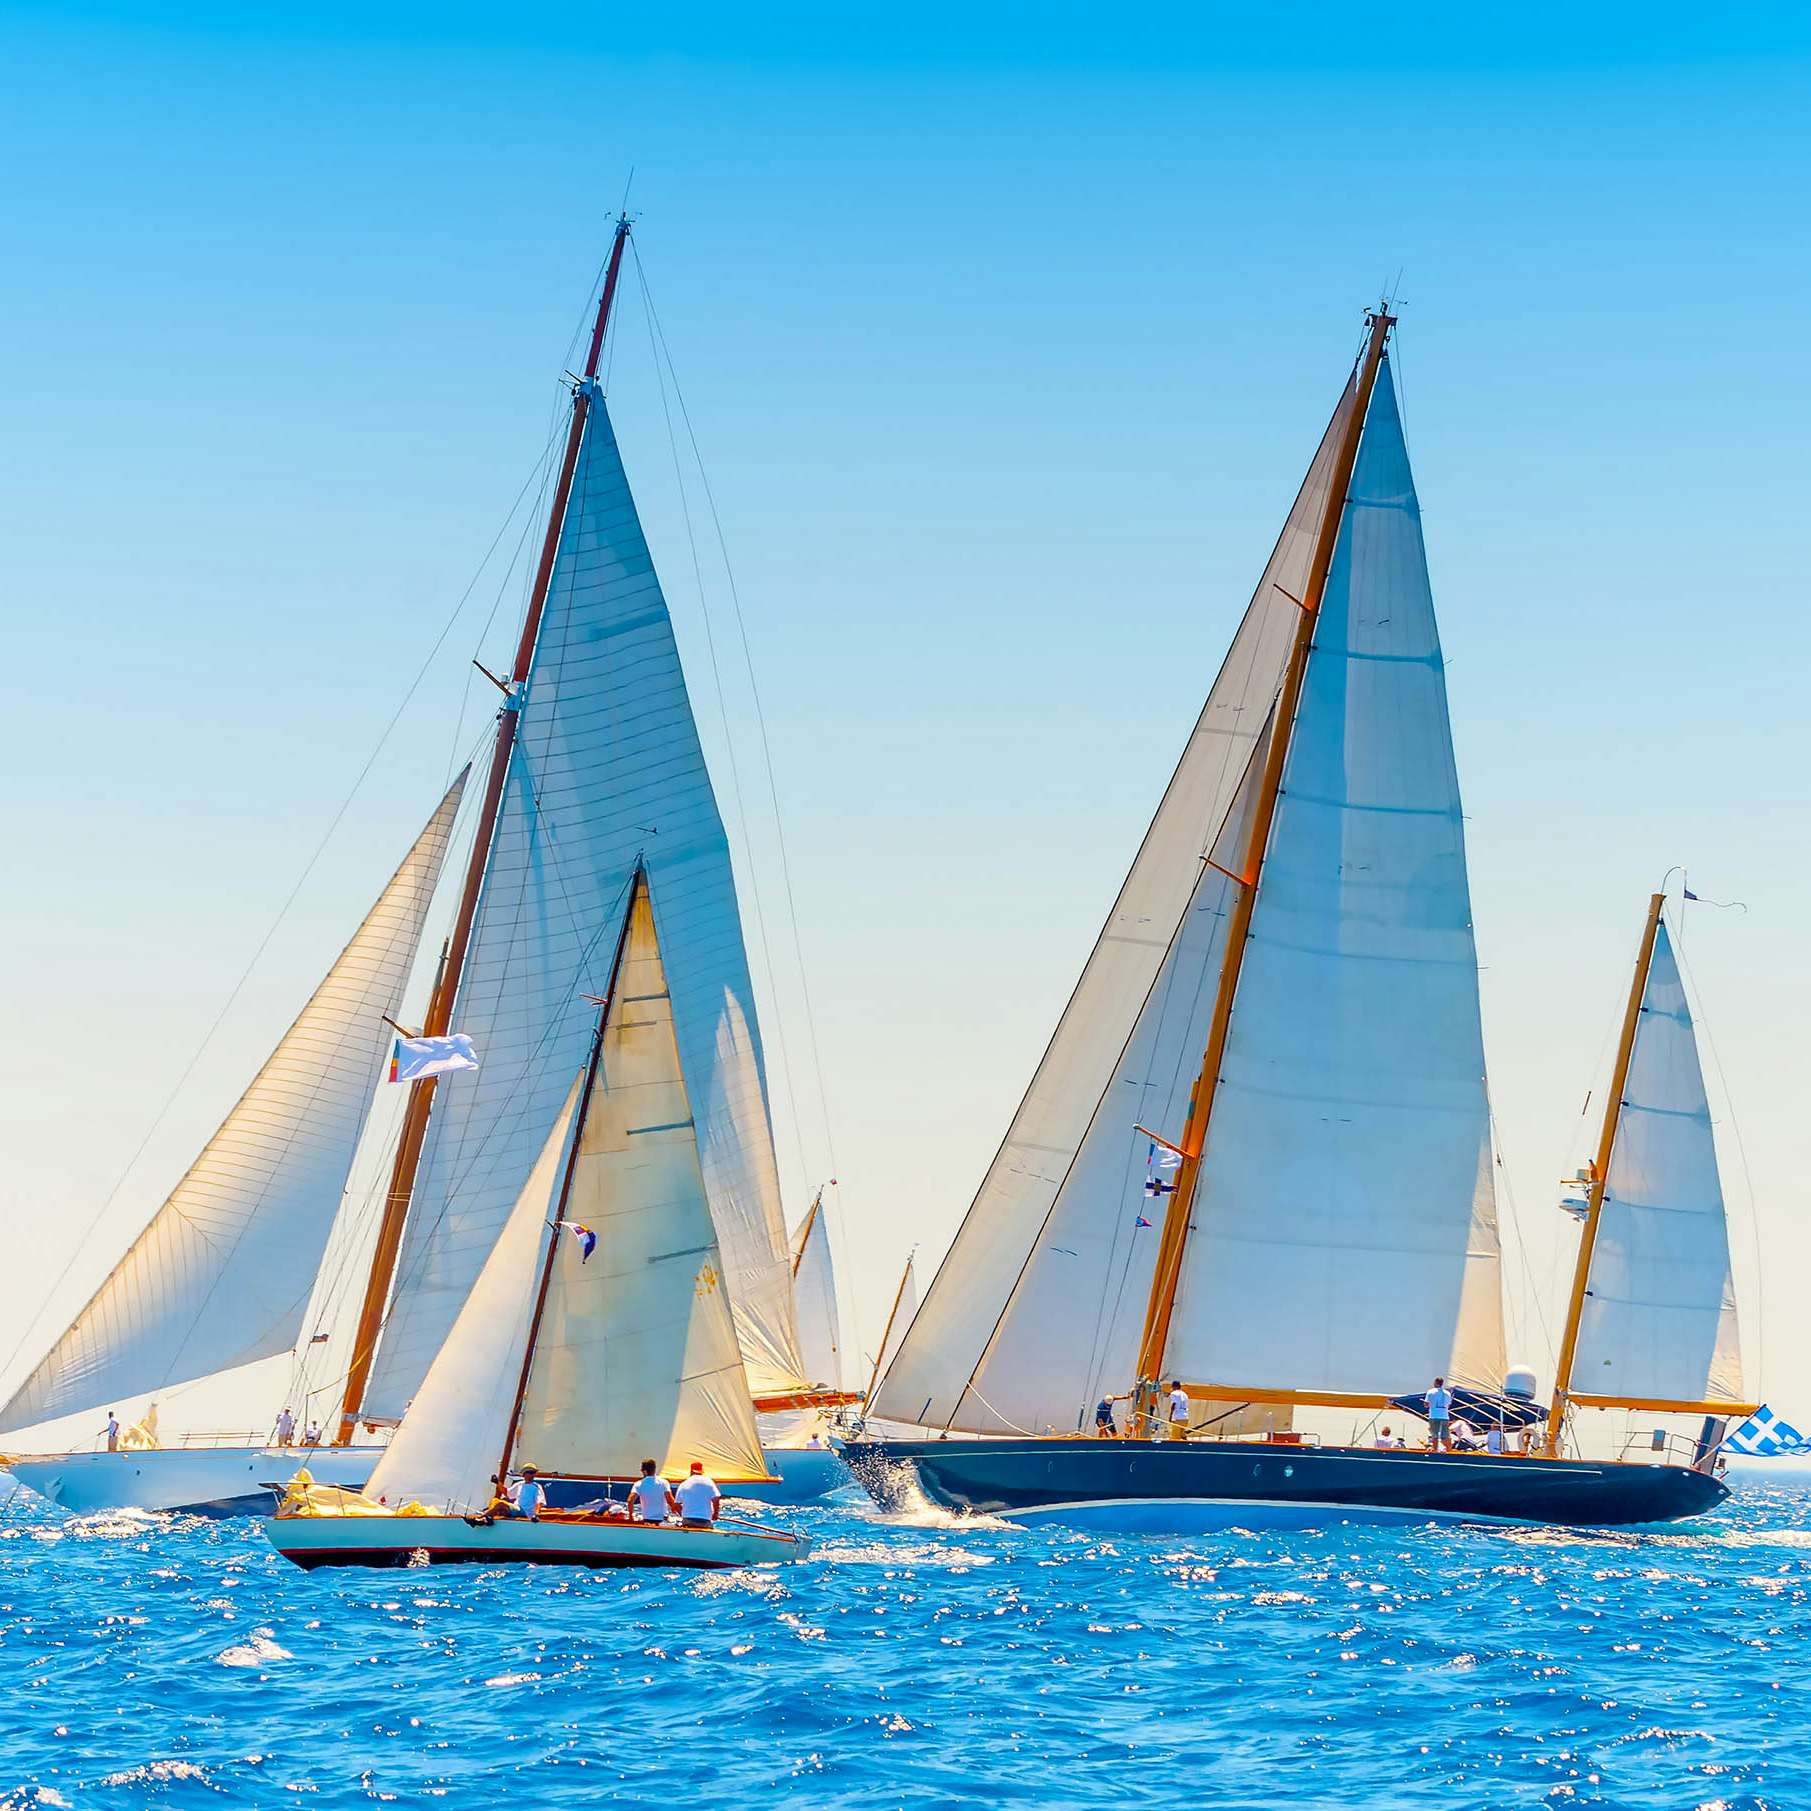 Sailing yachts racing during North Eleuthera Regatta